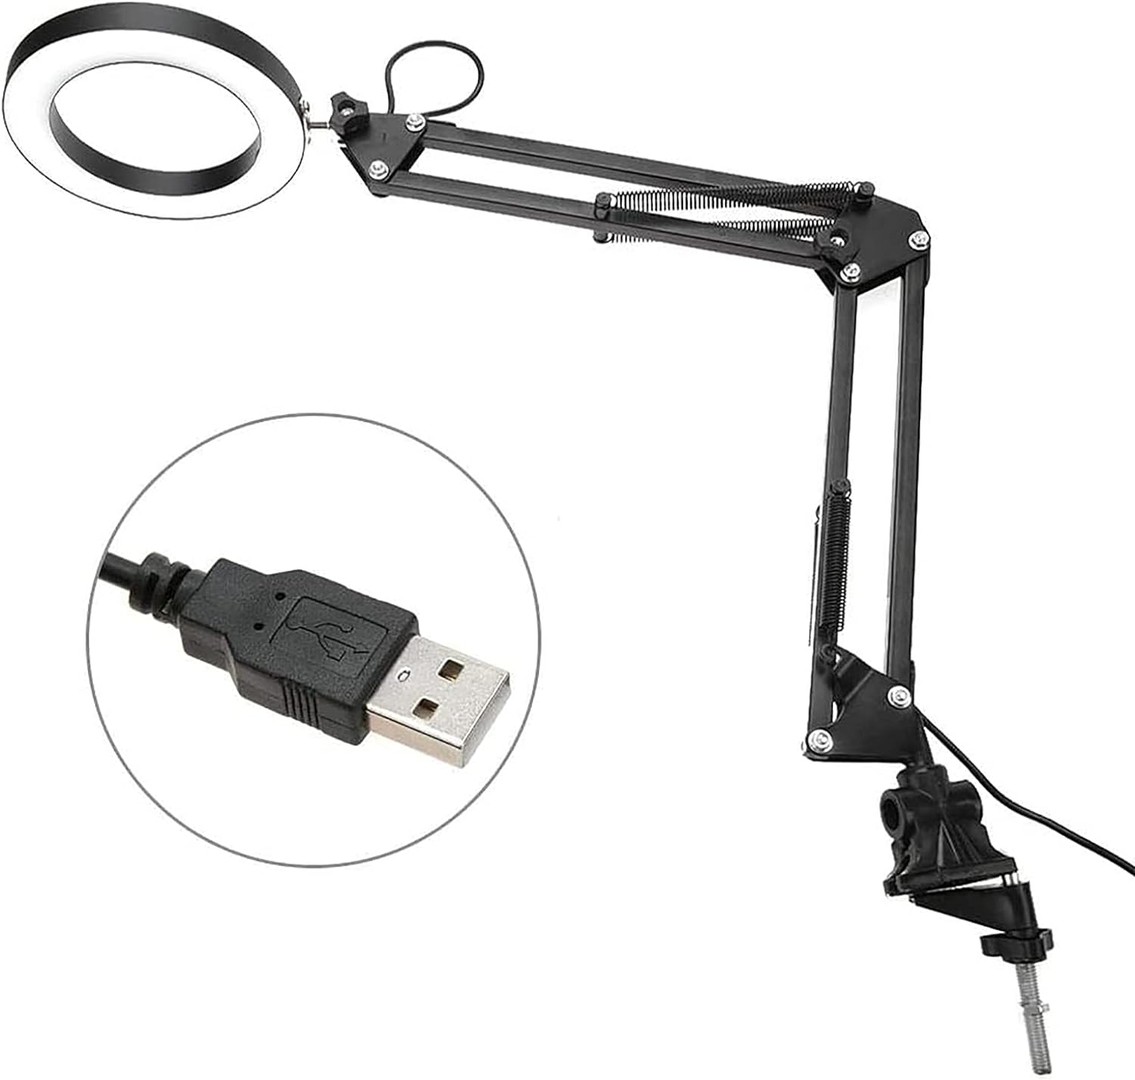 accesorios para electronica - Lámpara de escritorio con base y clip, regulable flexible de bajo consumo 0